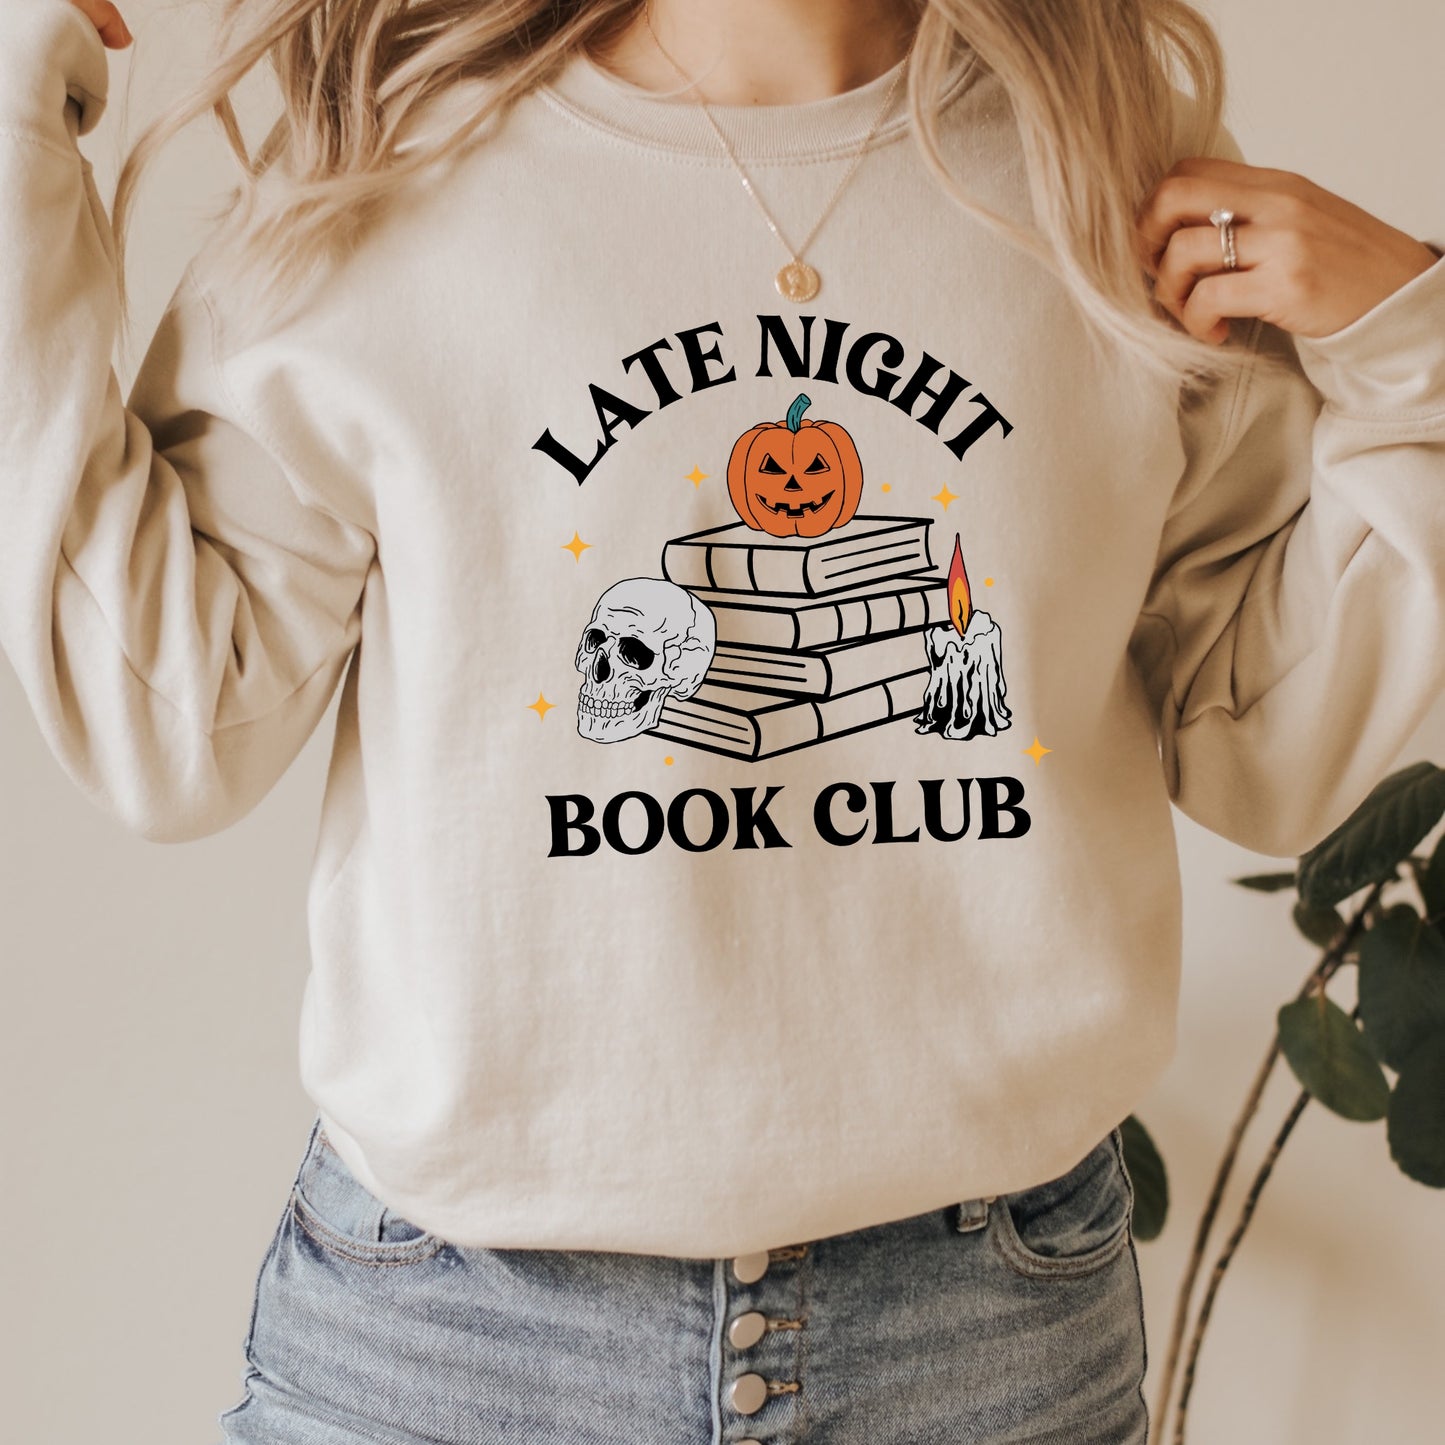 Late Night Book Club Sand Sweatshirt | Bookish Merch | Ink & Stories